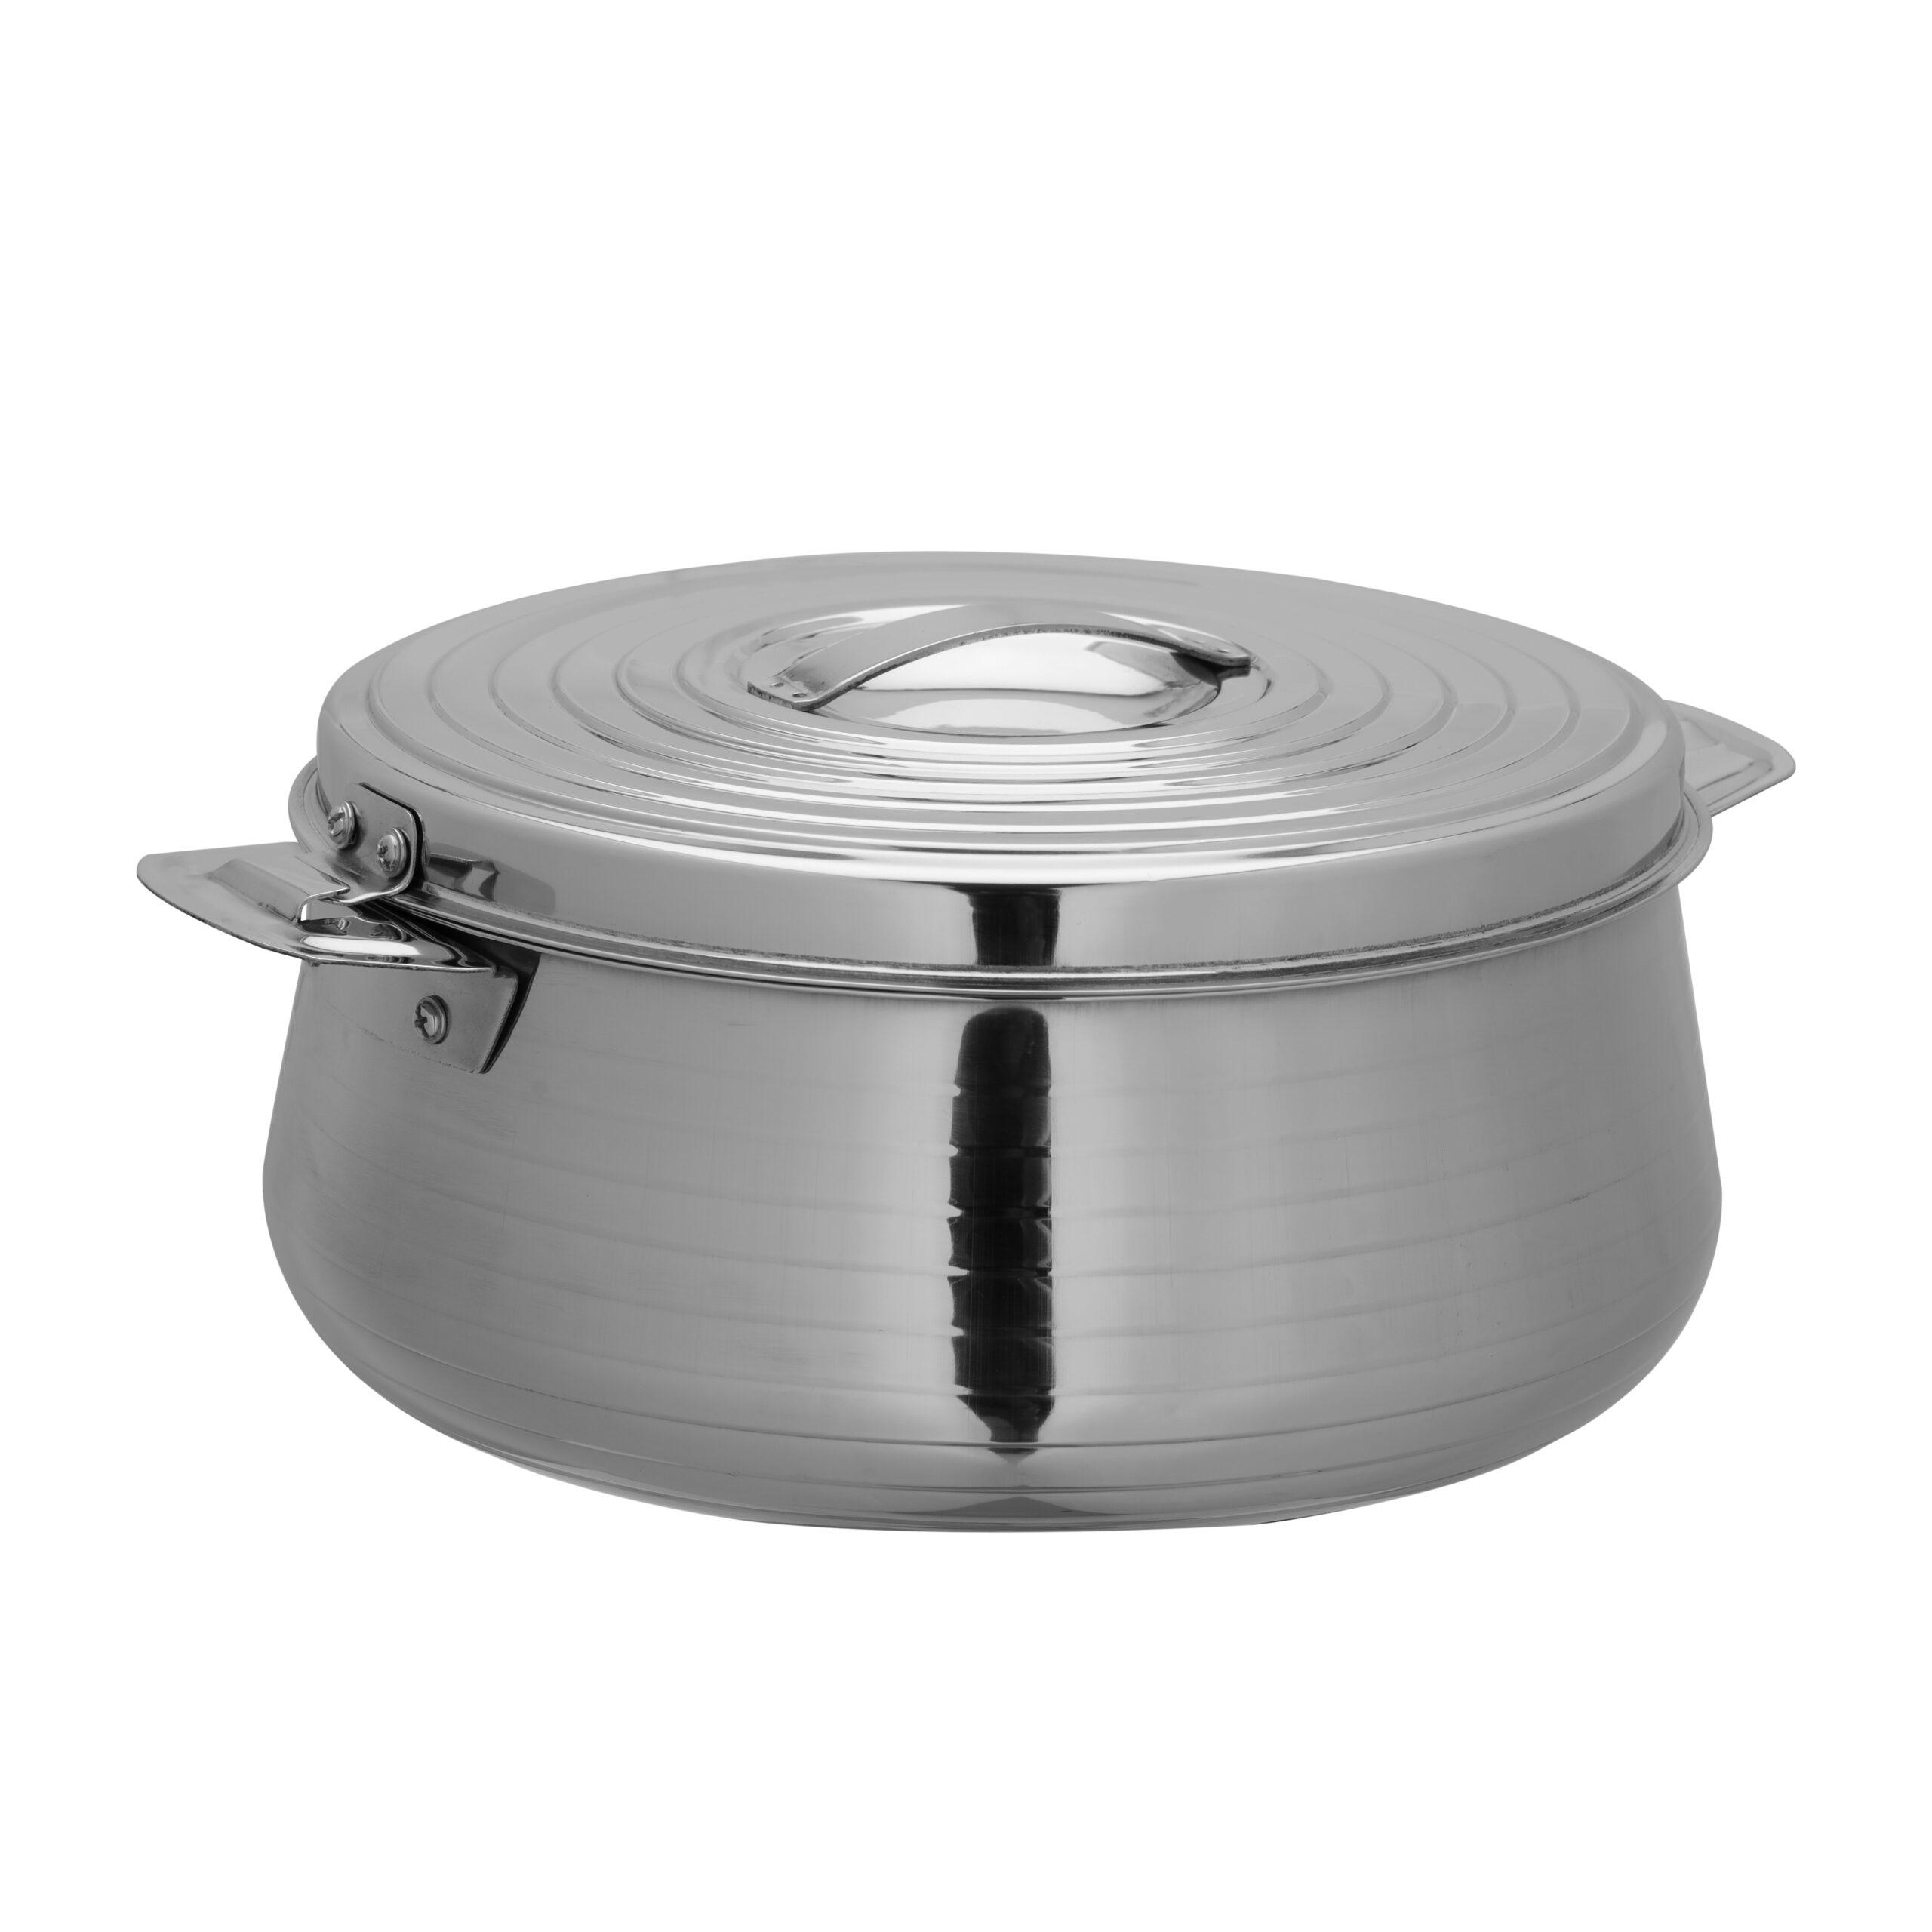 قدر طبخ من الستانلس بسعة 3.5 لتر | Royalford Hilux Double Wall Stainless Steel Hot Pot